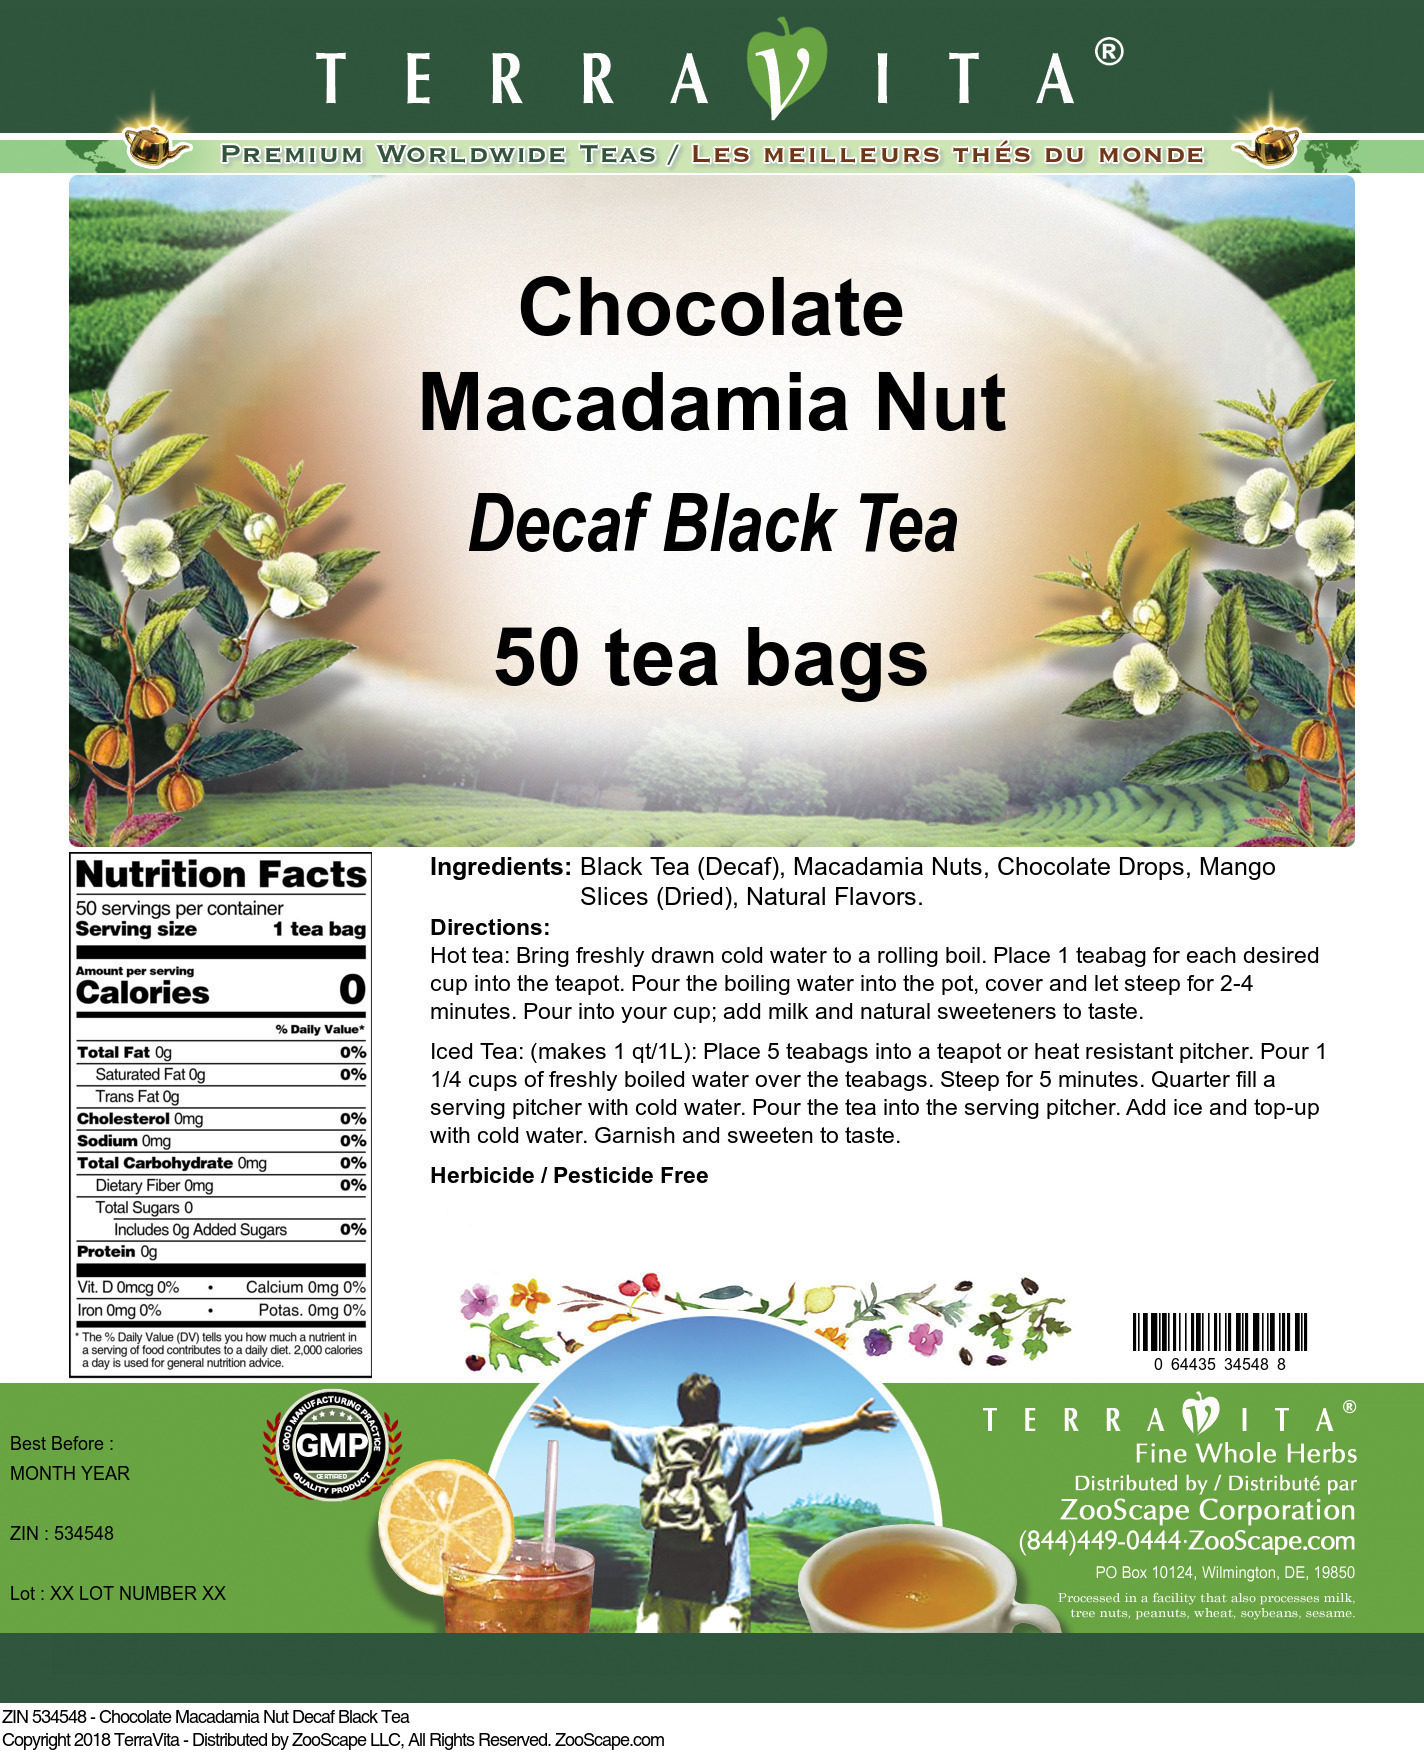 Chocolate Macadamia Nut Decaf Black Tea - Label